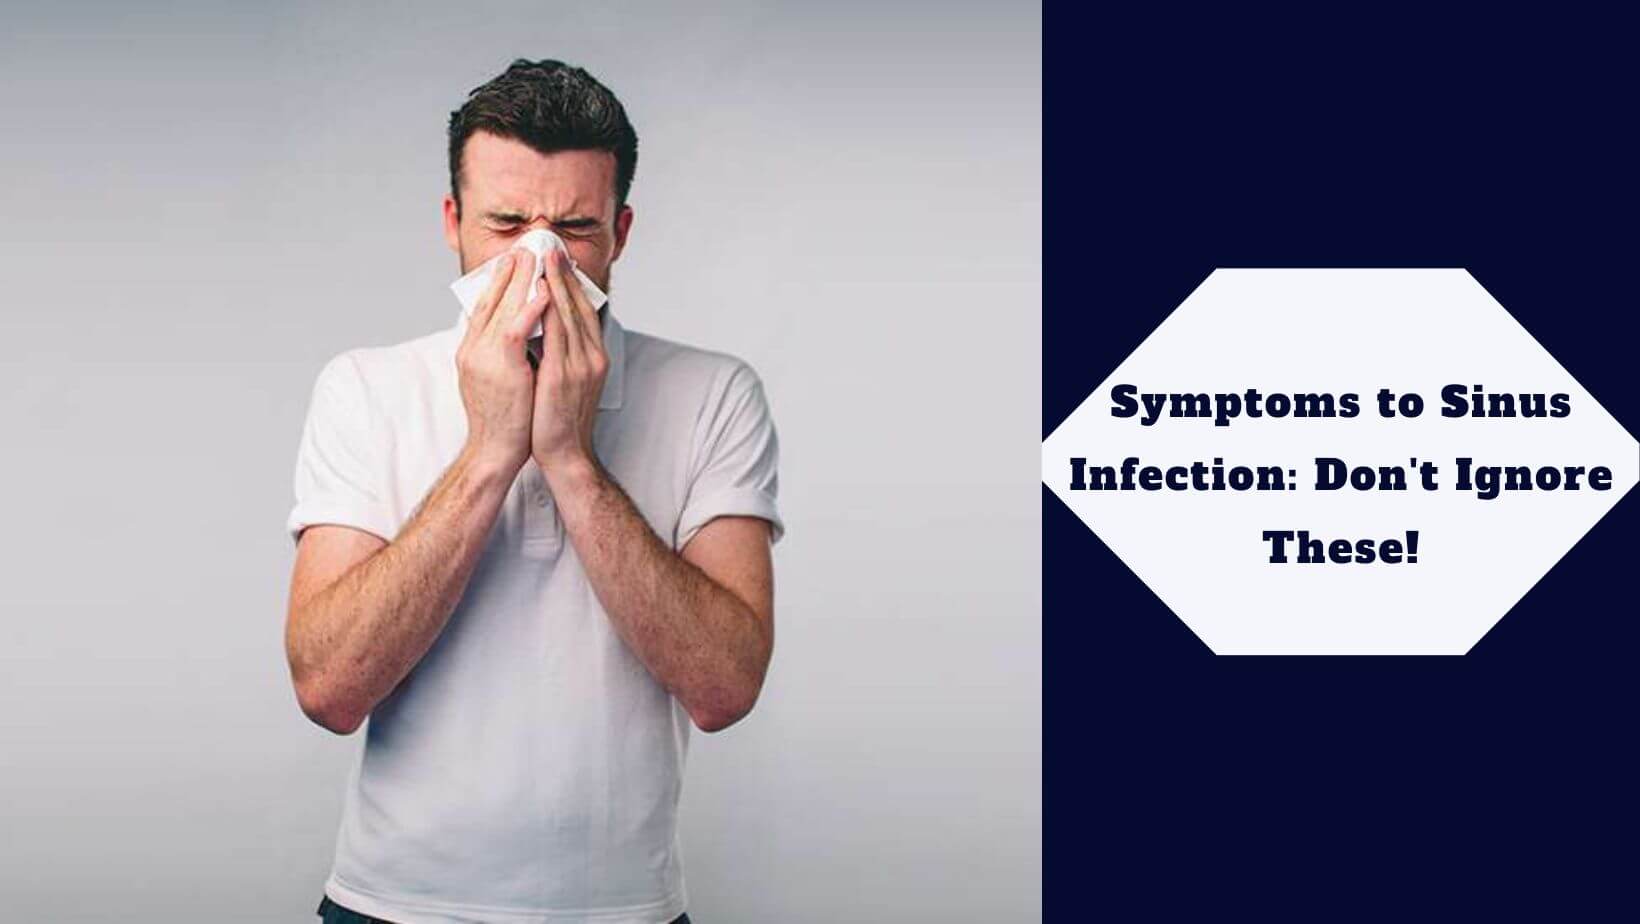 Symptoms to Sinus Infection